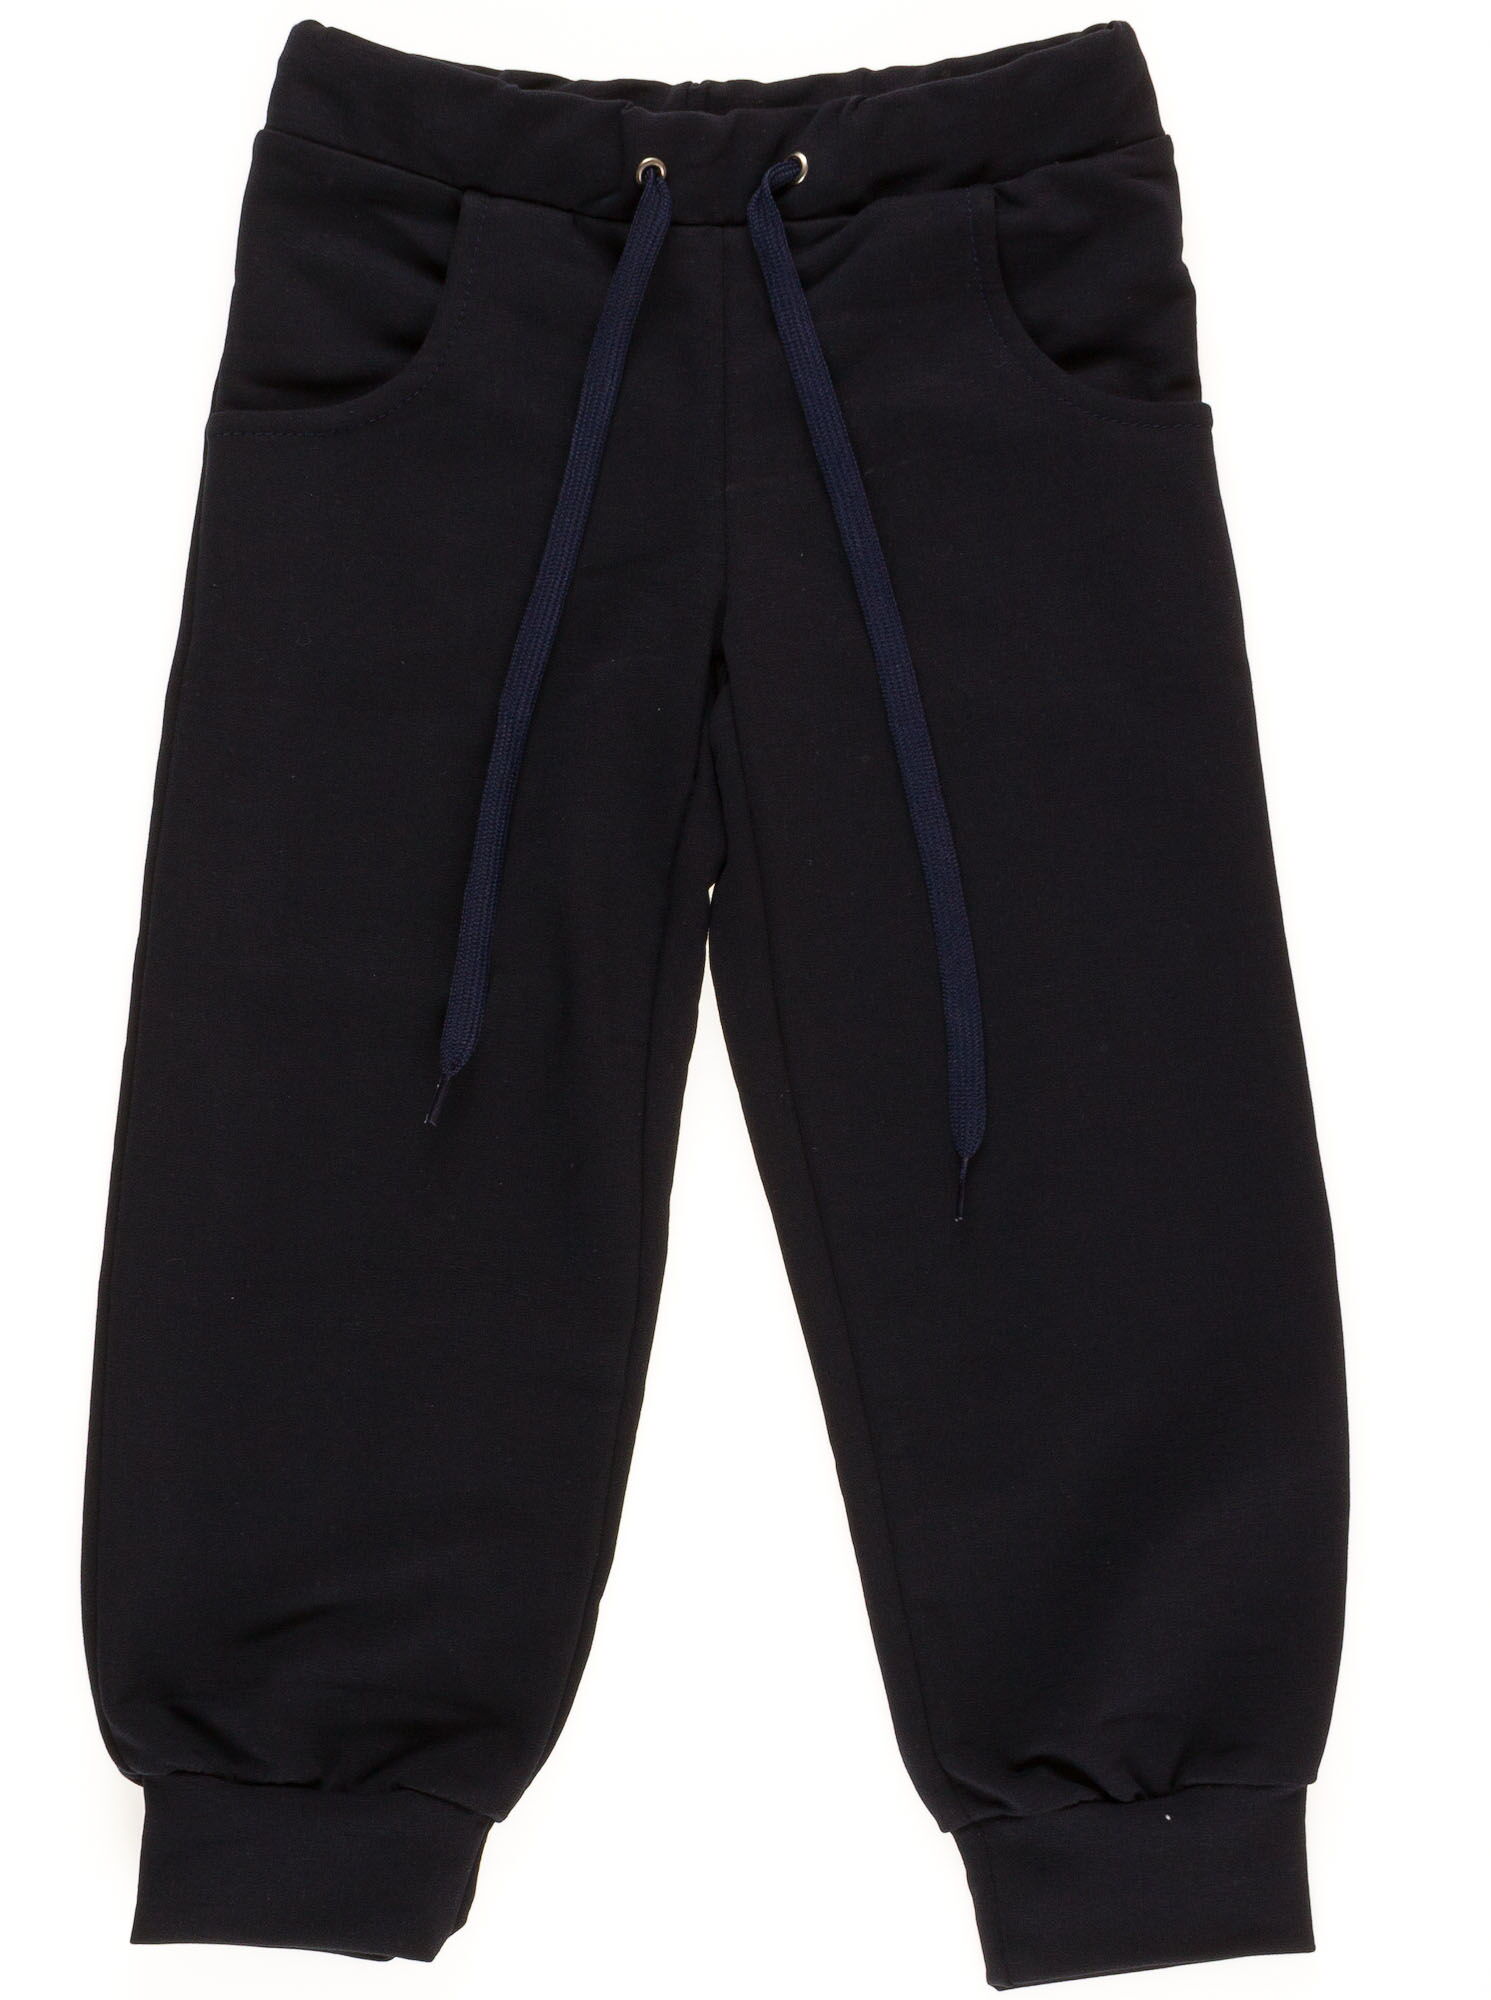 Спортивные штаны MINI темно-синие 1517807 - цена